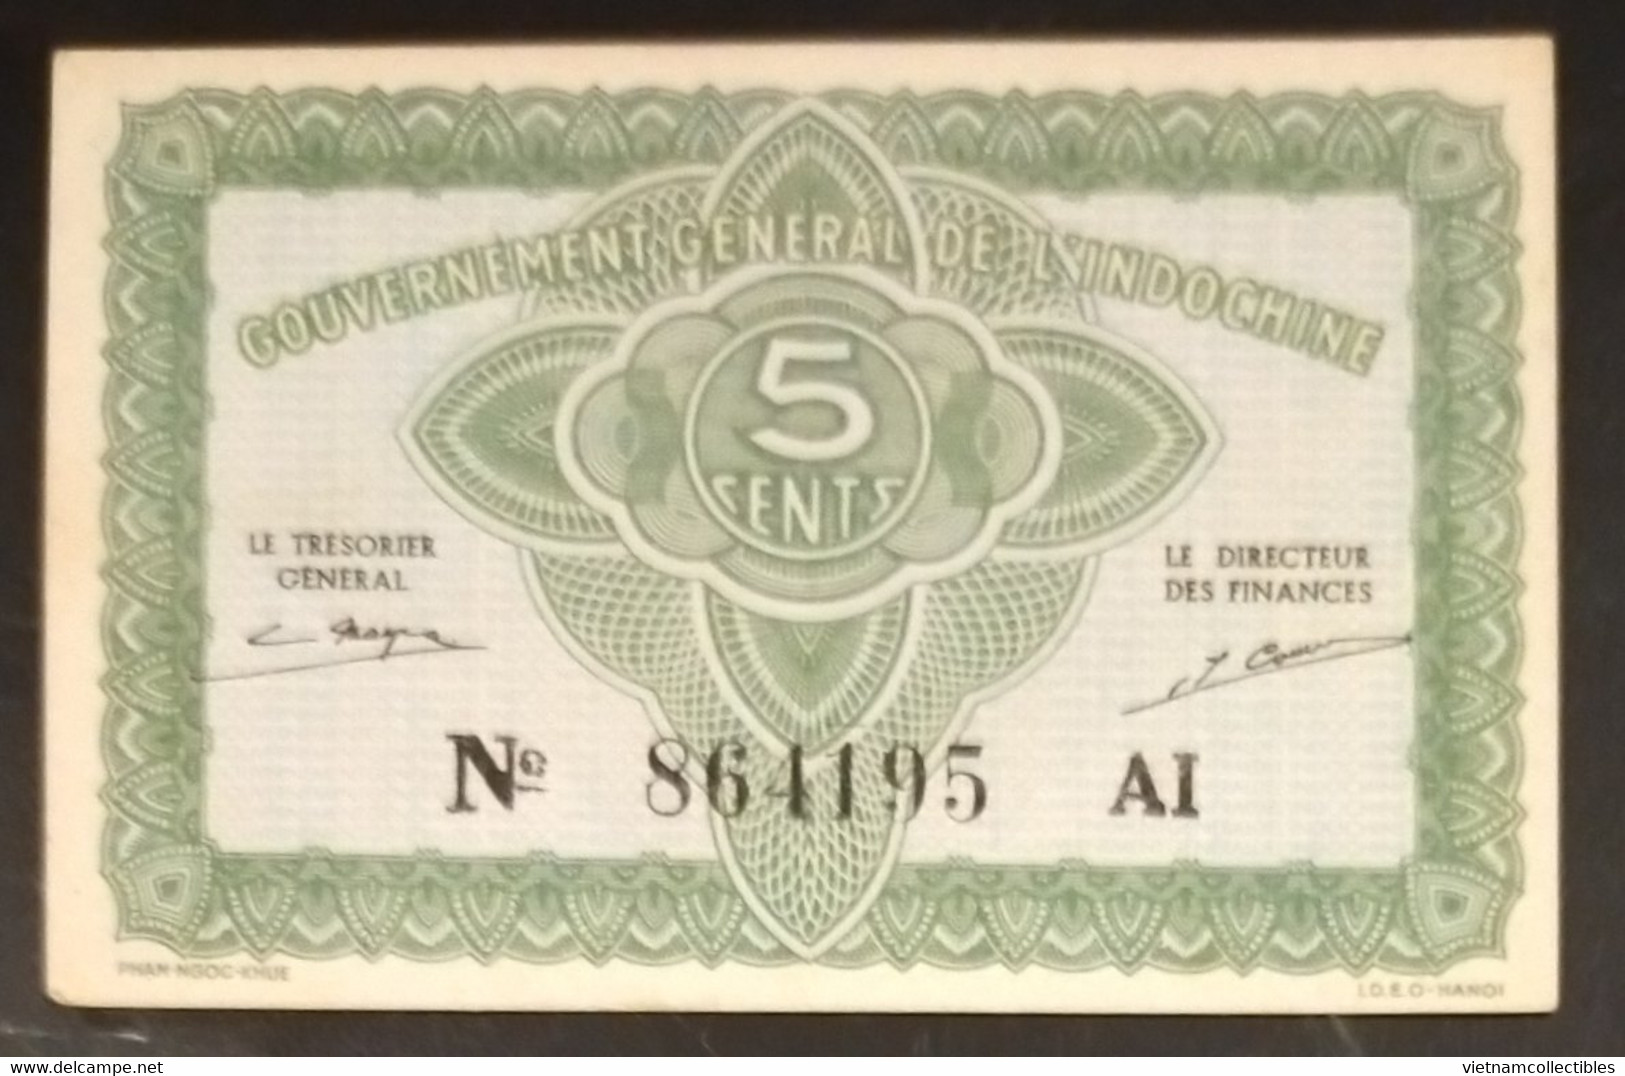 French Indochine Indochina Vietnam Viet Nam Laos Cambodia 5 Cents AU Banknote Note Billet 1942 - Pick # 88a / 2 Photos - Indochine